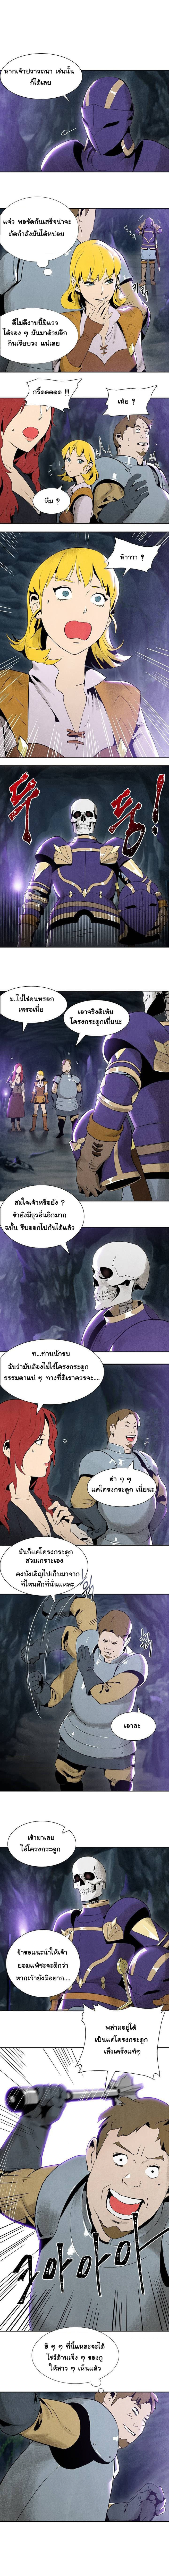 Skeleton Soldier6 (7)